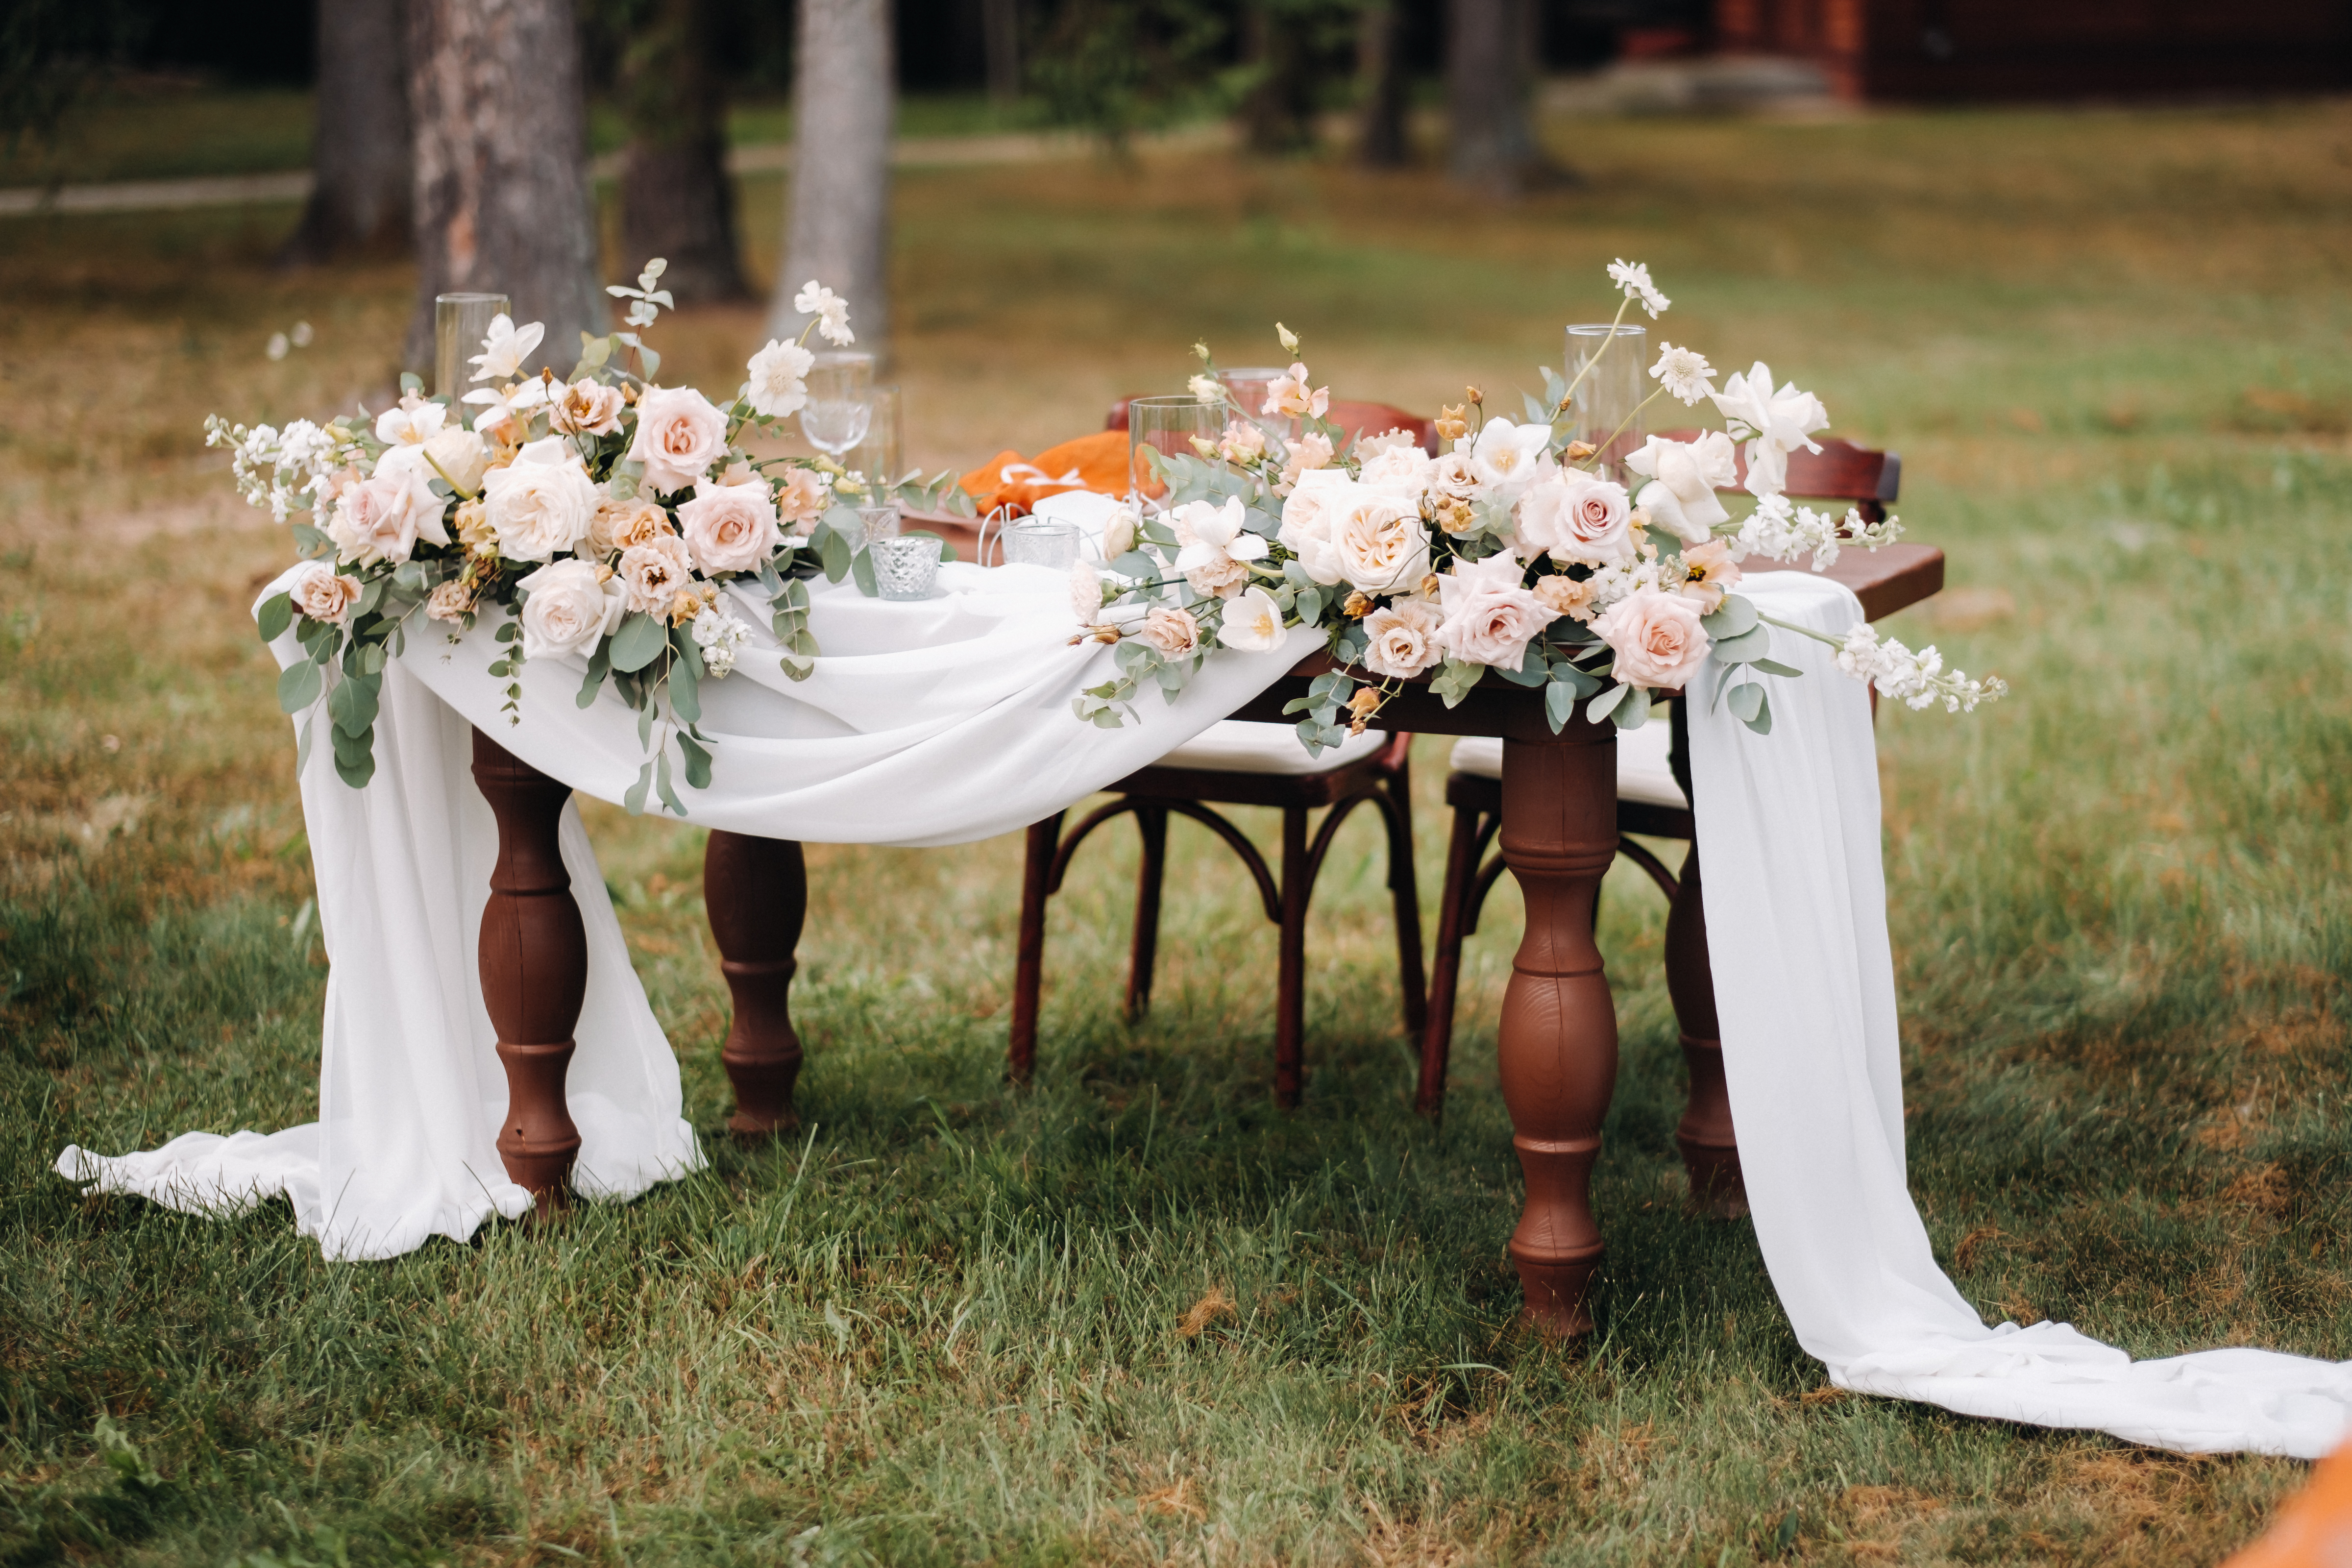 wedding-table-decoration-with-flowers-on-the-table-twmutr2.jpg